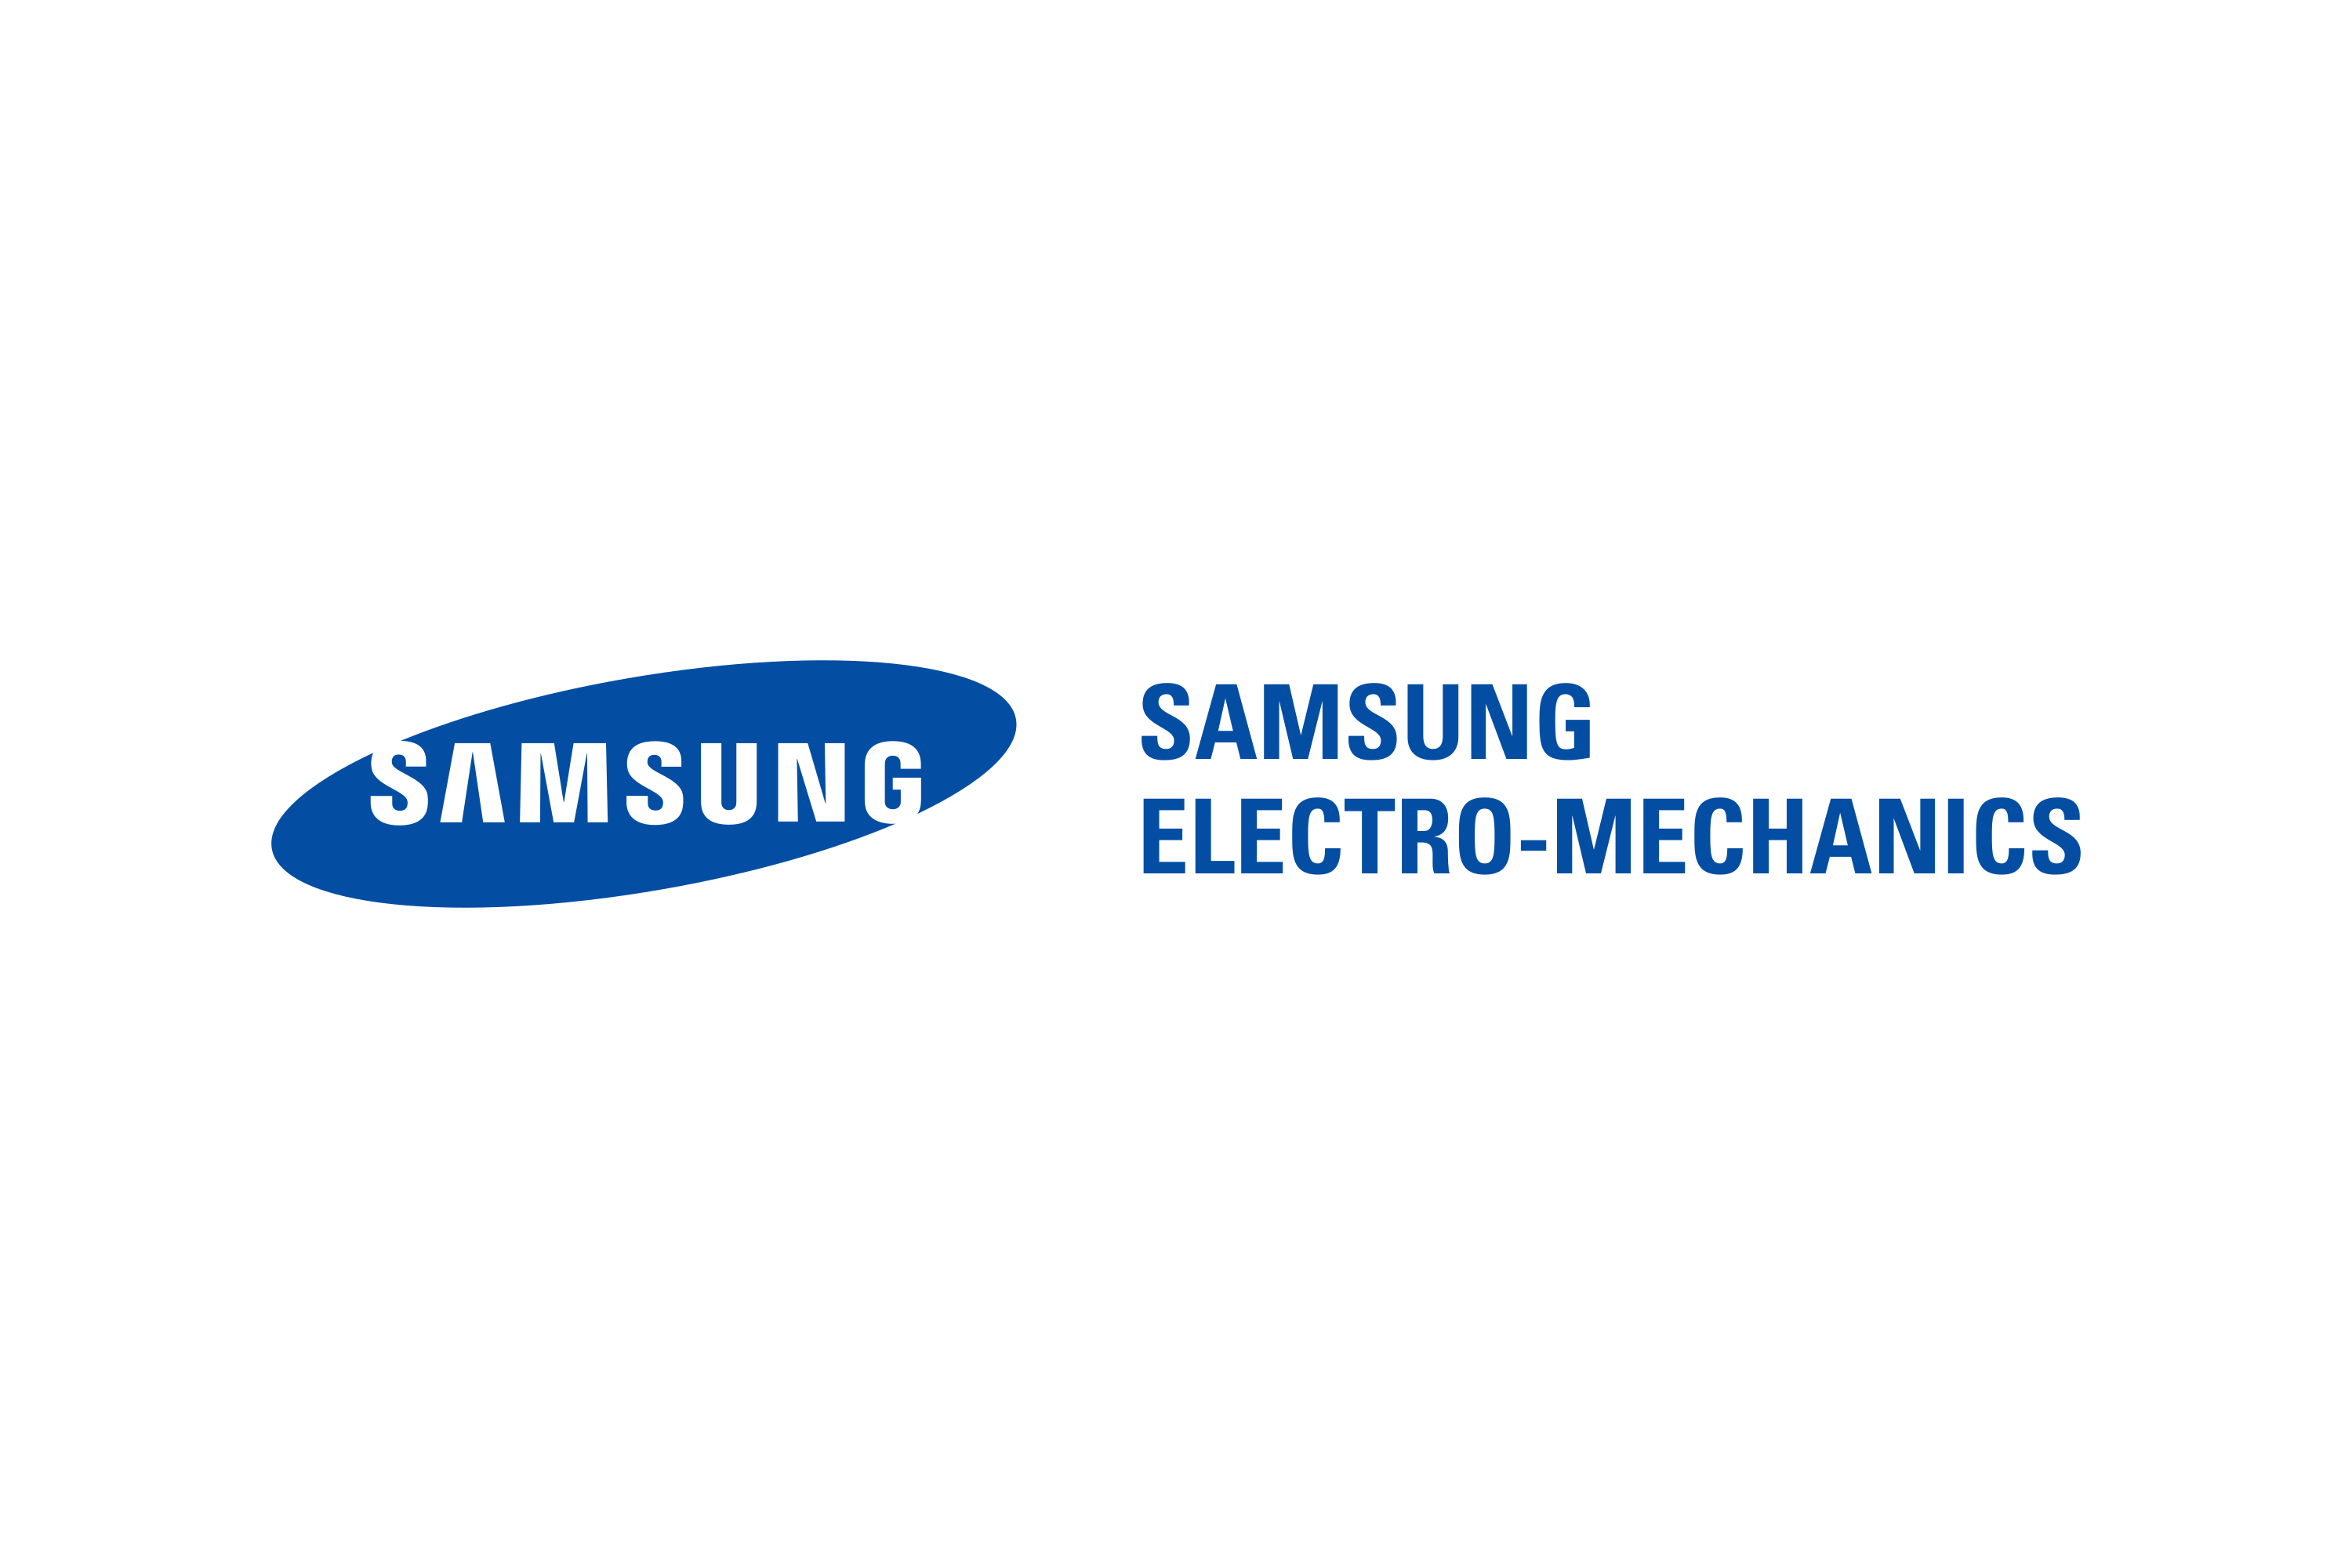 Download Samsung Electro-Mechanics Logo in SVG Vector or PNG File ...